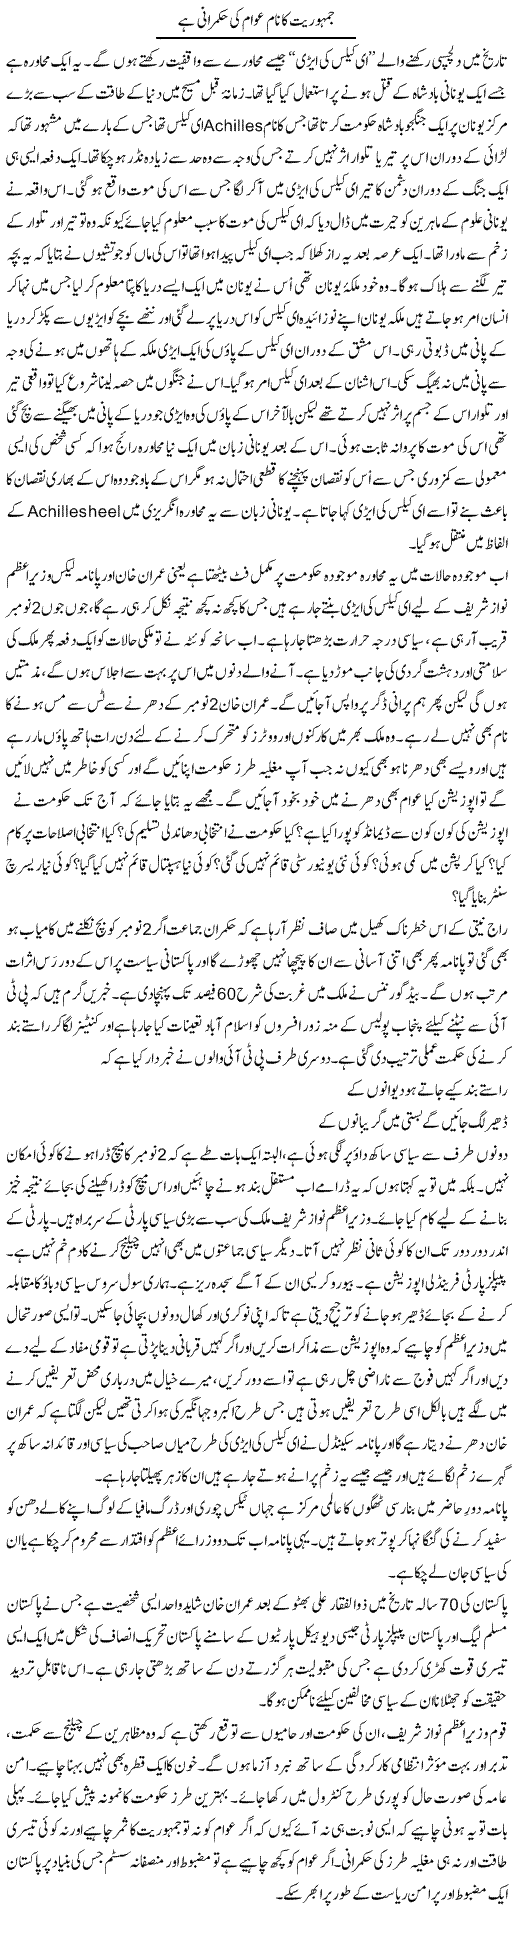 Jamhuriat Ka Naam Awam Ki Hukmarani Hai | Ali Ahmad Dhillon | Daily Urdu Columns